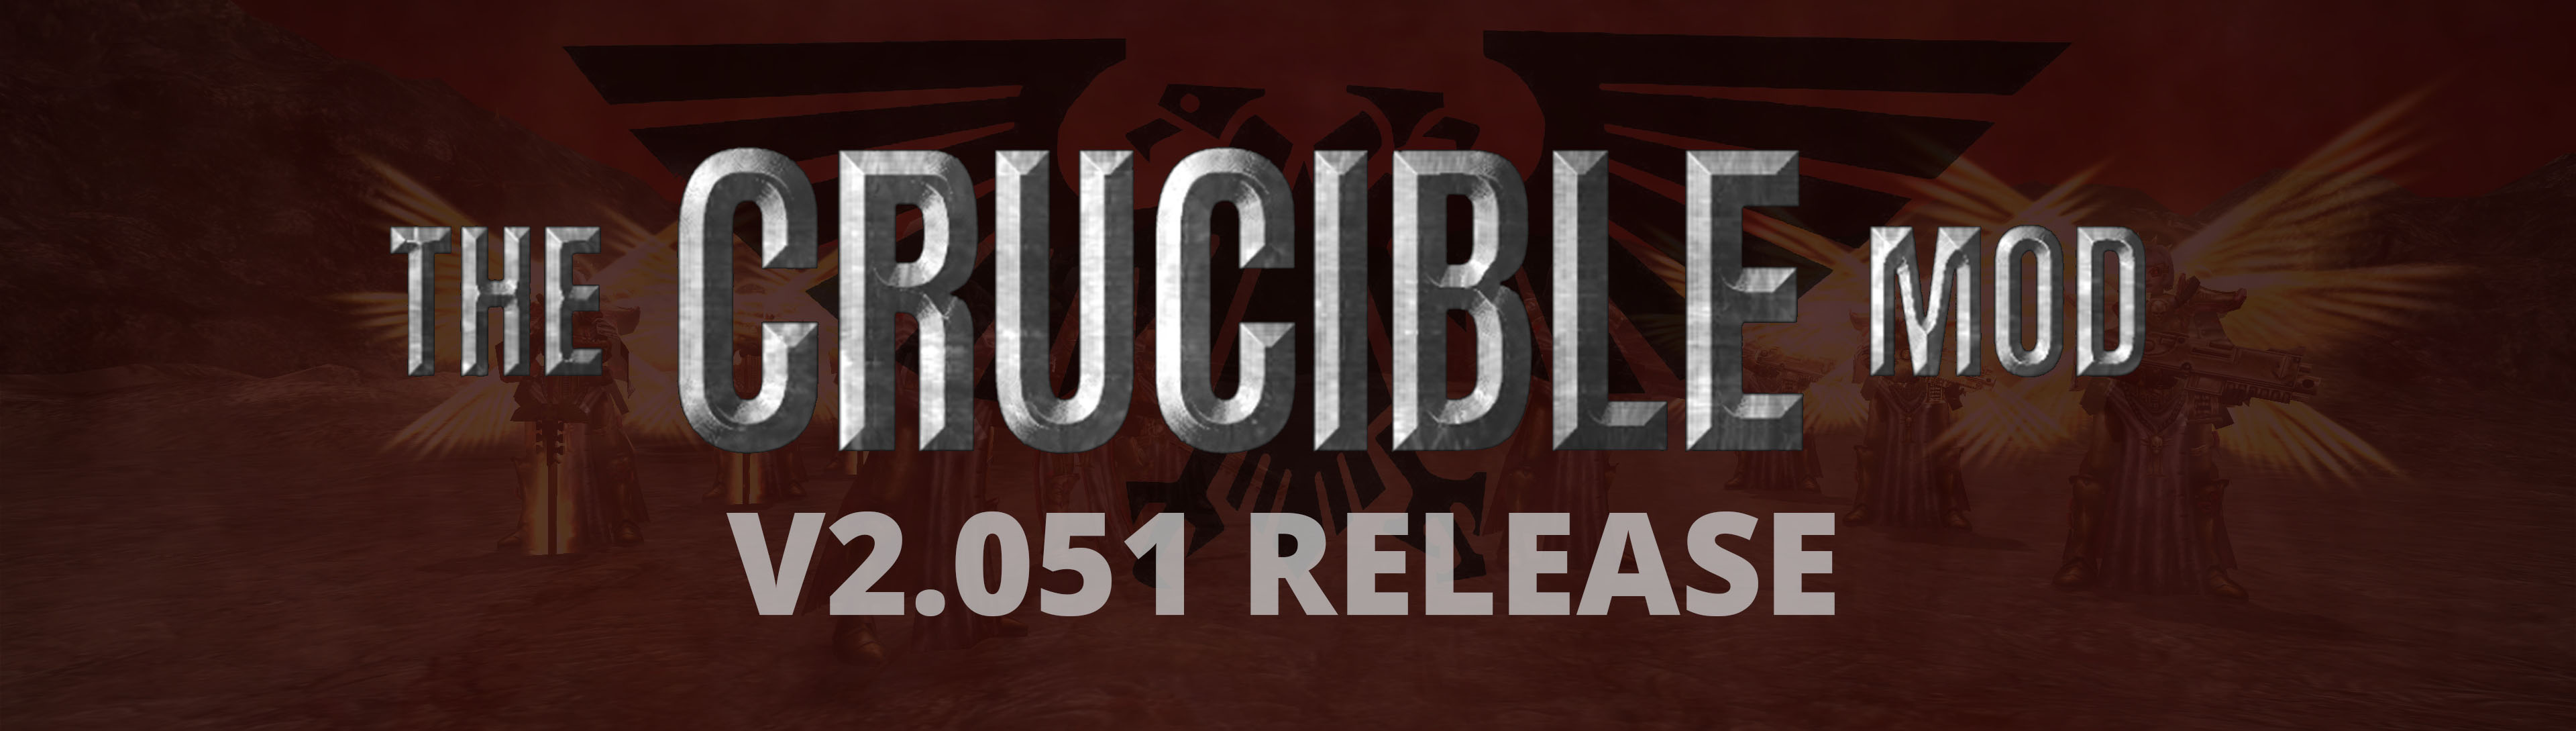 Cruci v2.051 released!